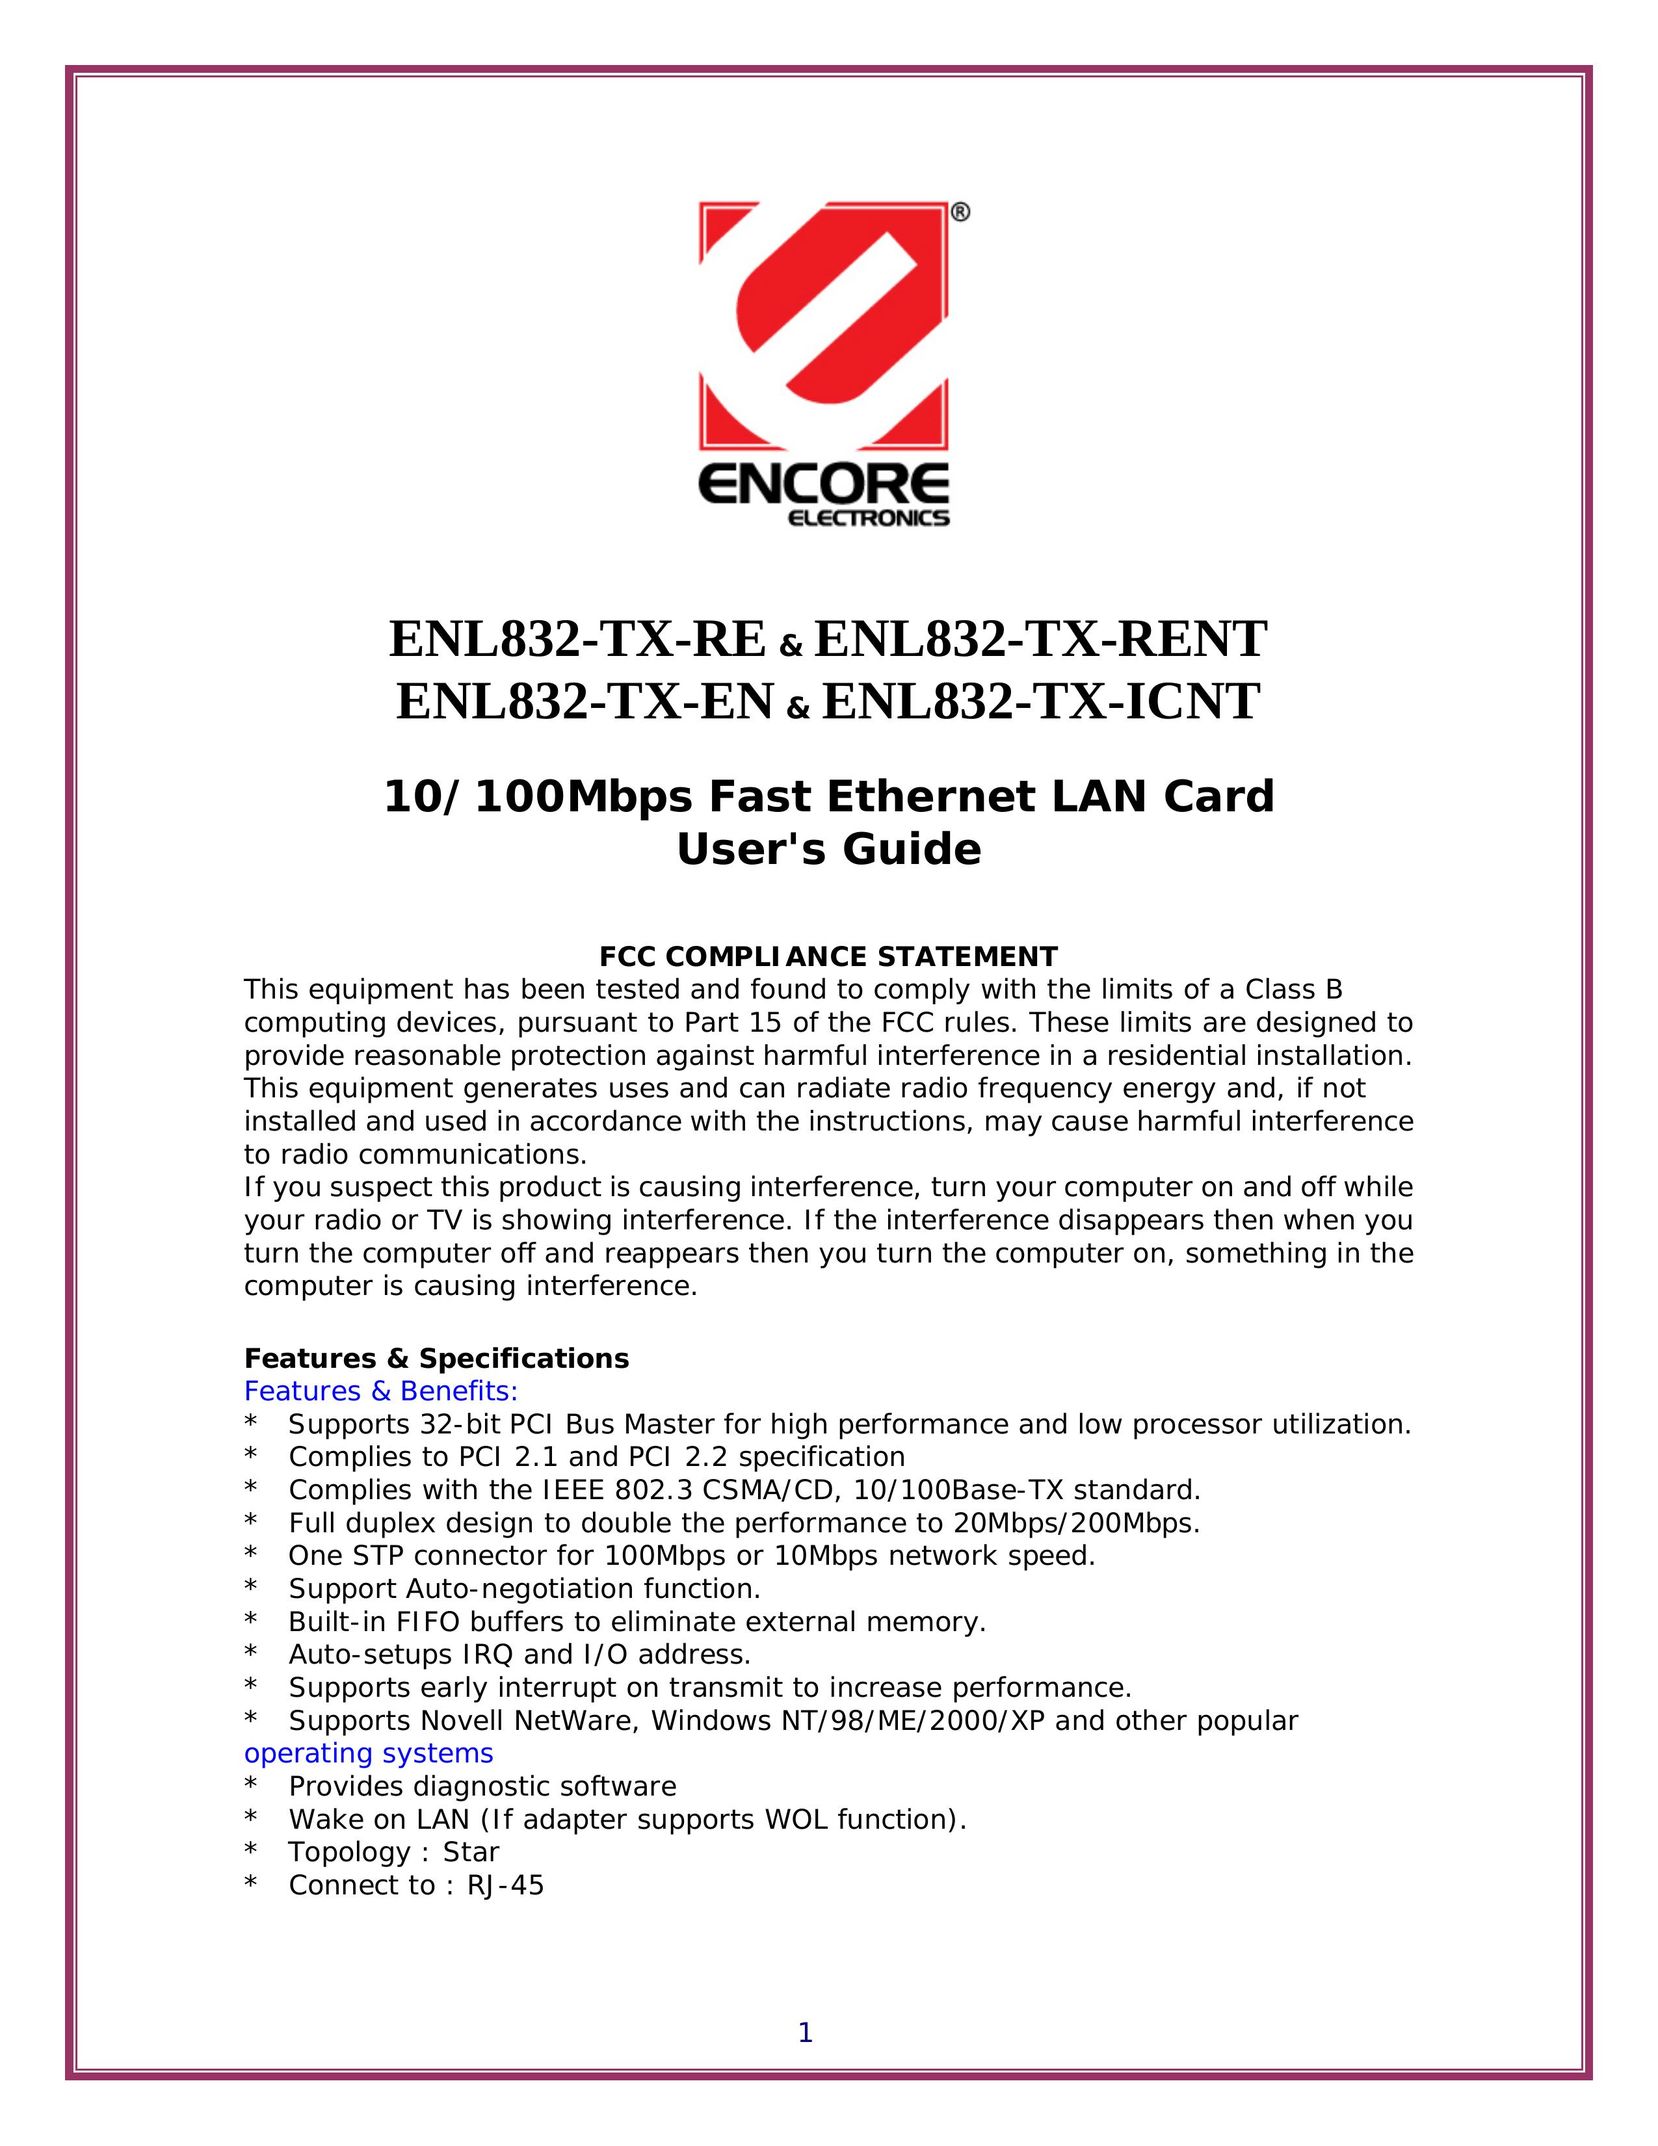 Encore electronic ENL832-TX-EN Network Card User Manual